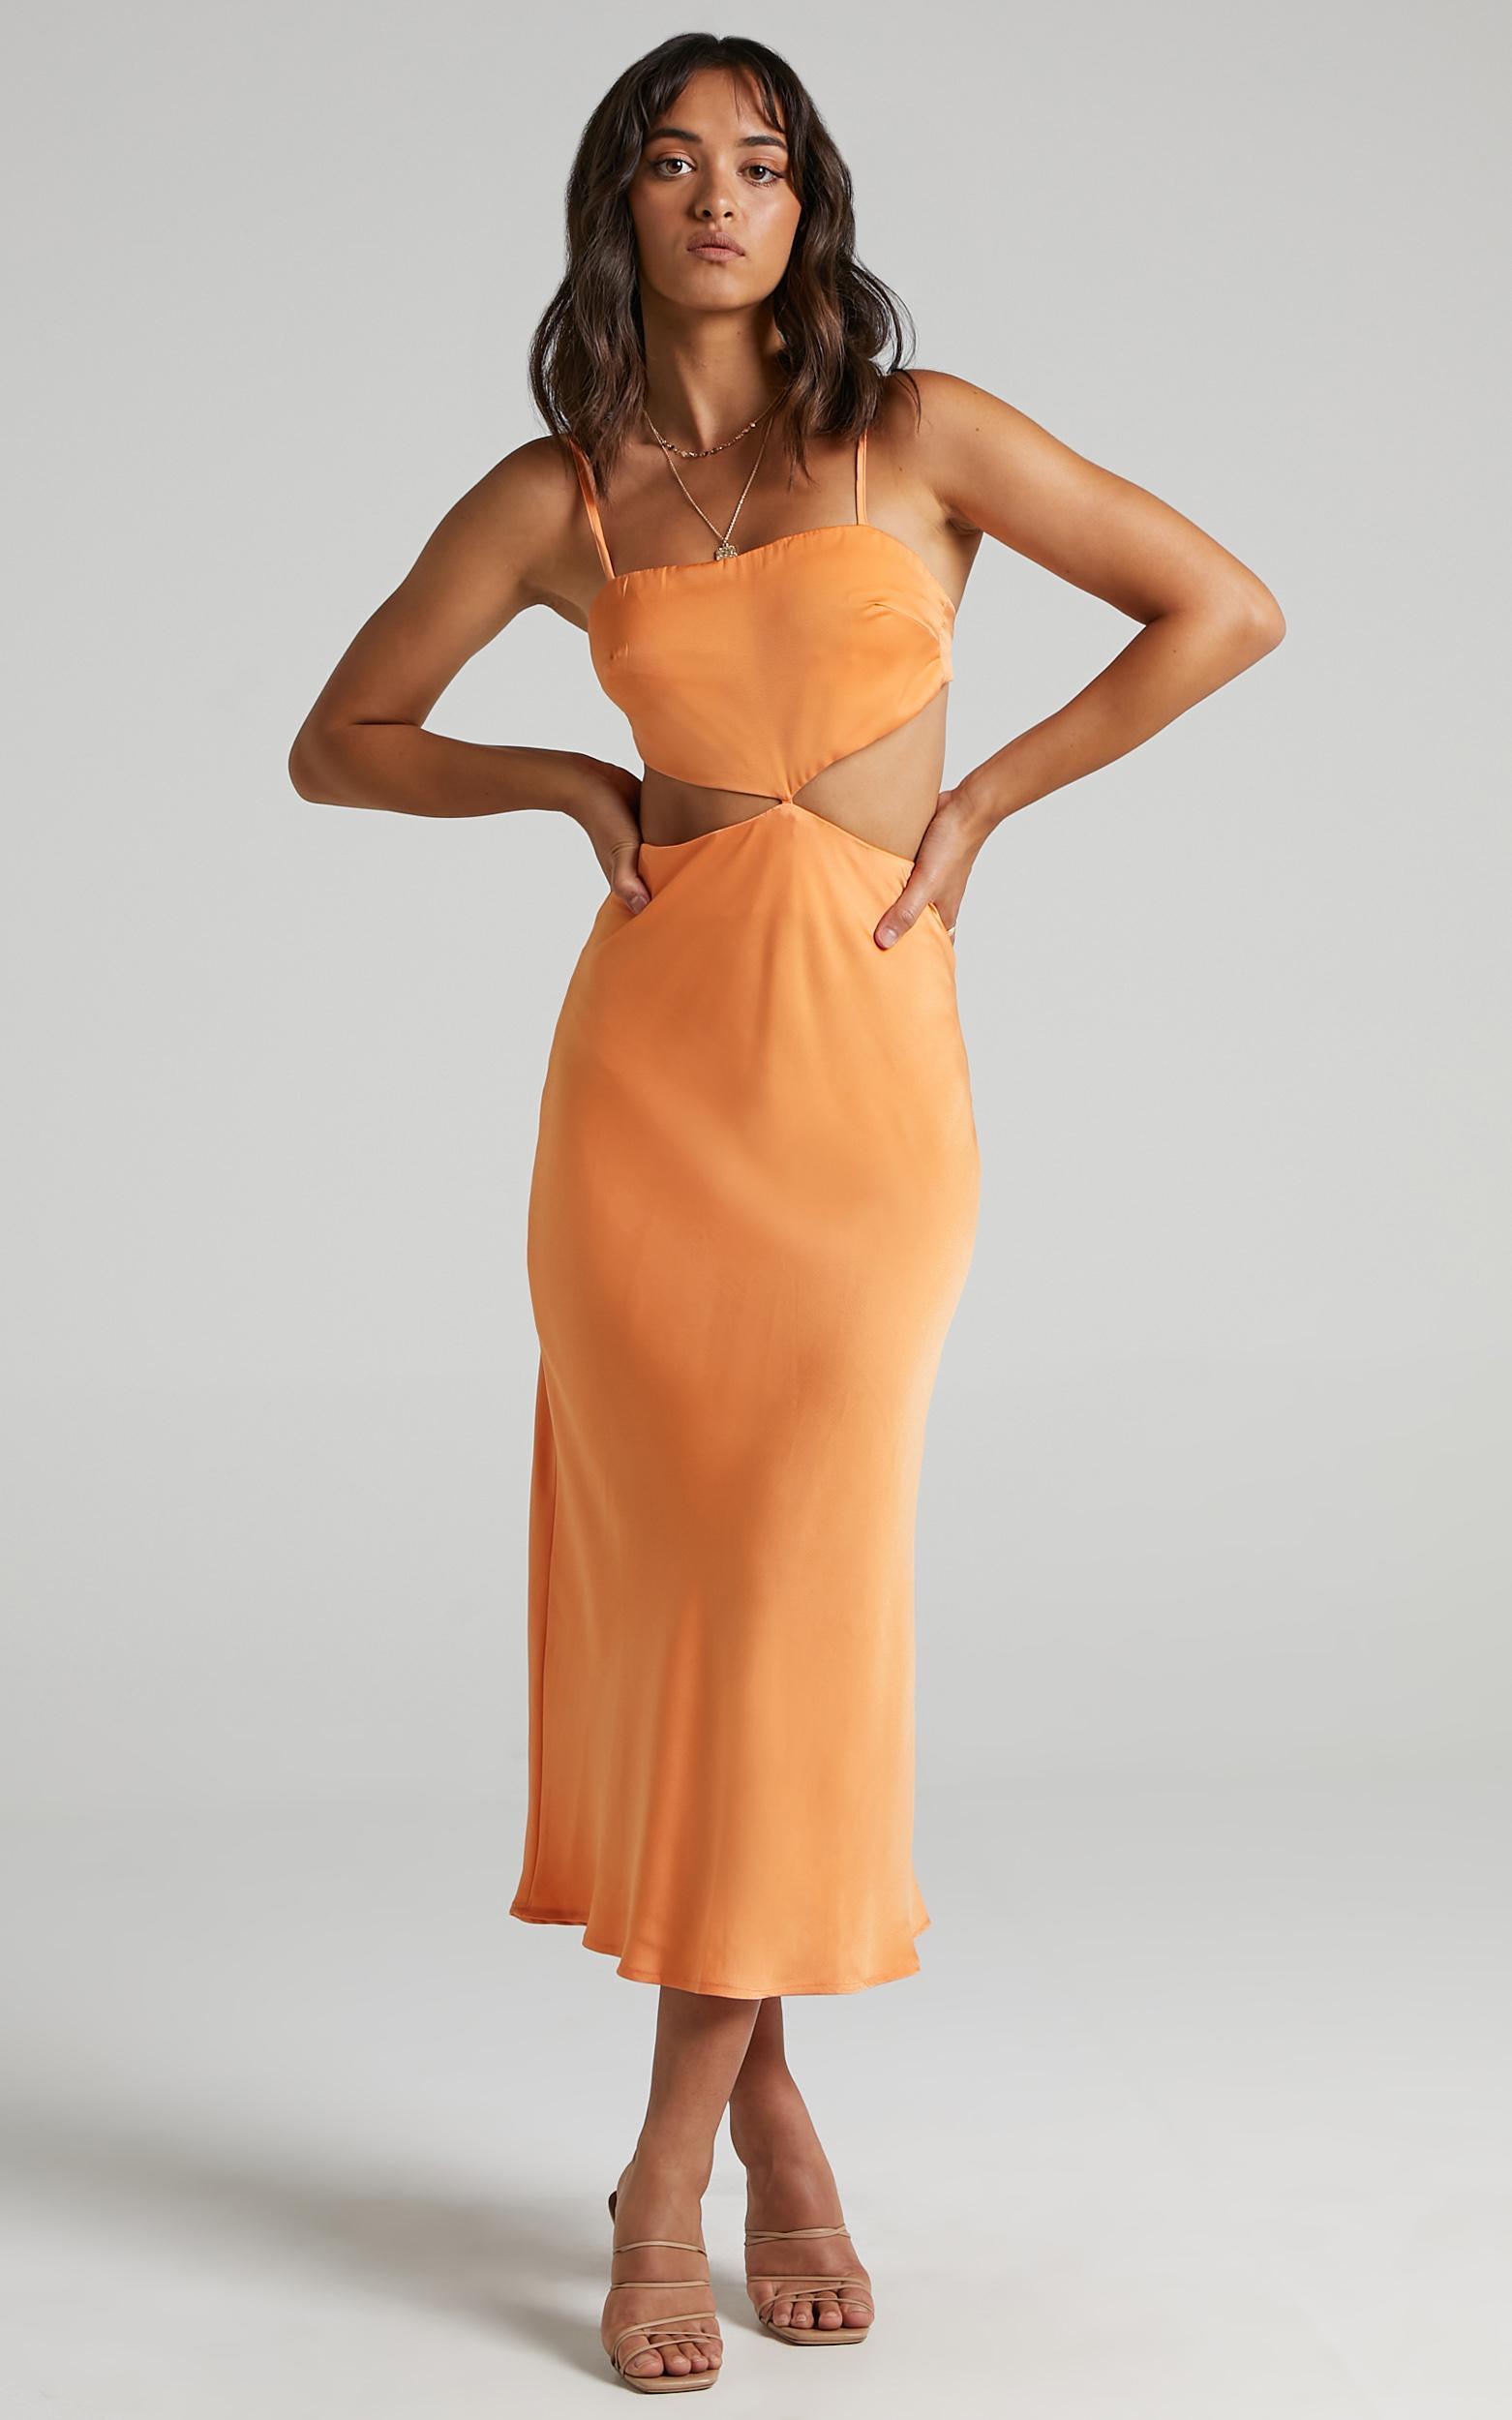 Kerley Dress in Orange - 06, ORG1, hi-res image number null